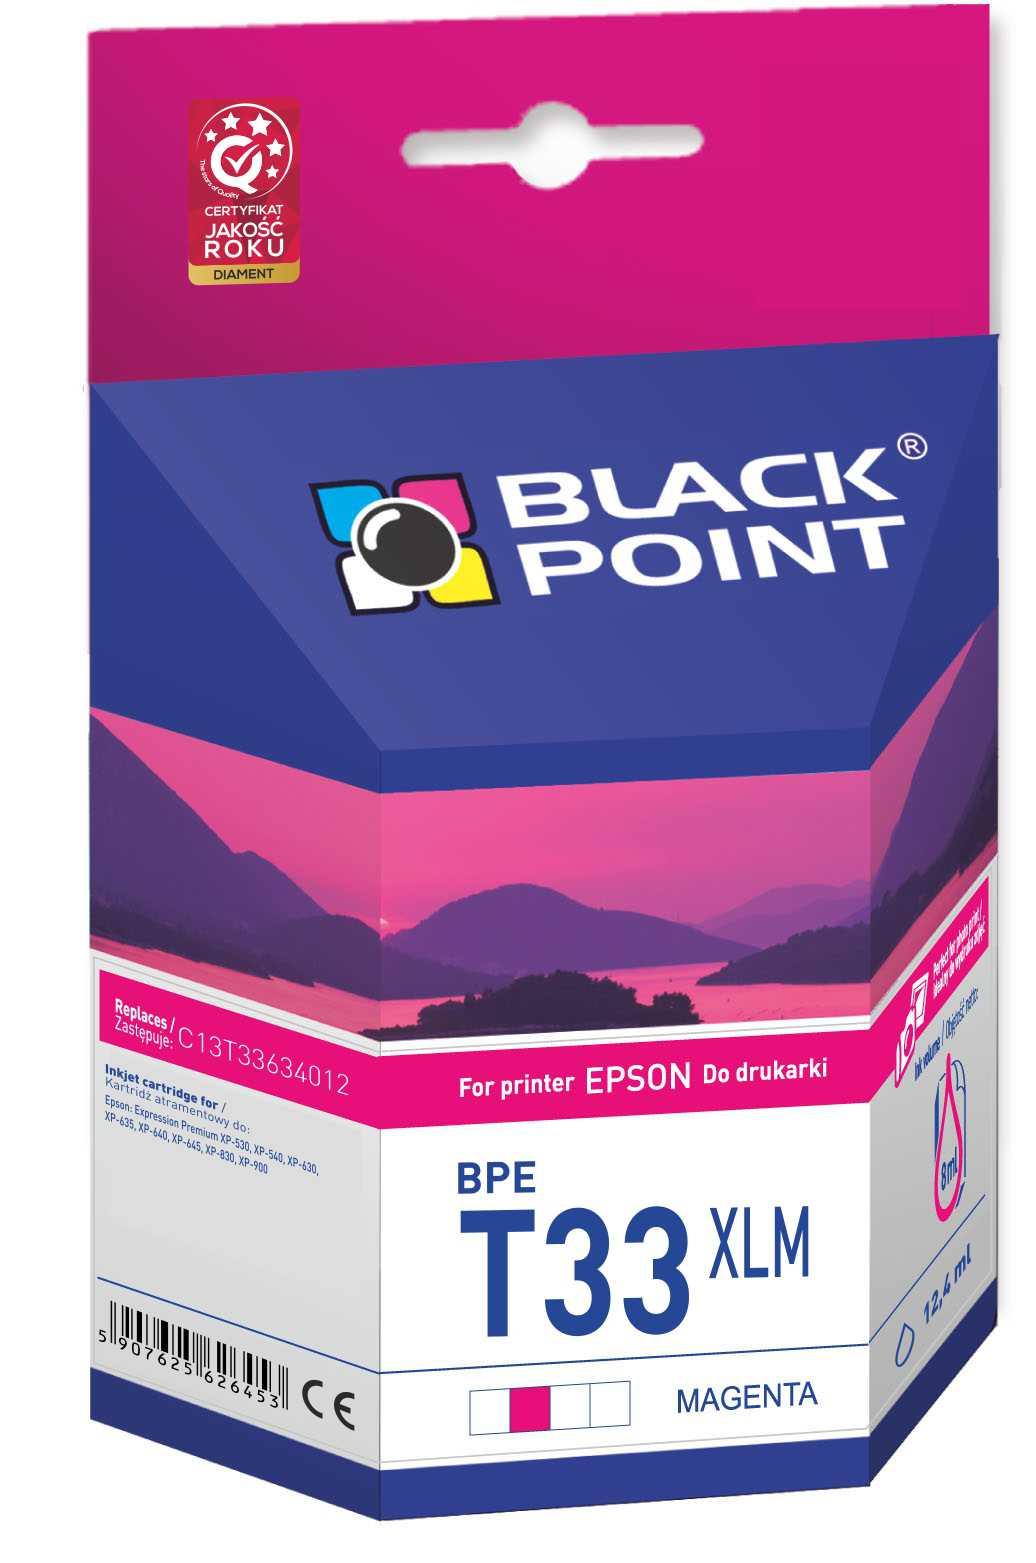 CMYK - Black Point tusz BPET33XLM zastpuje Epson C13T33634012, magenta
